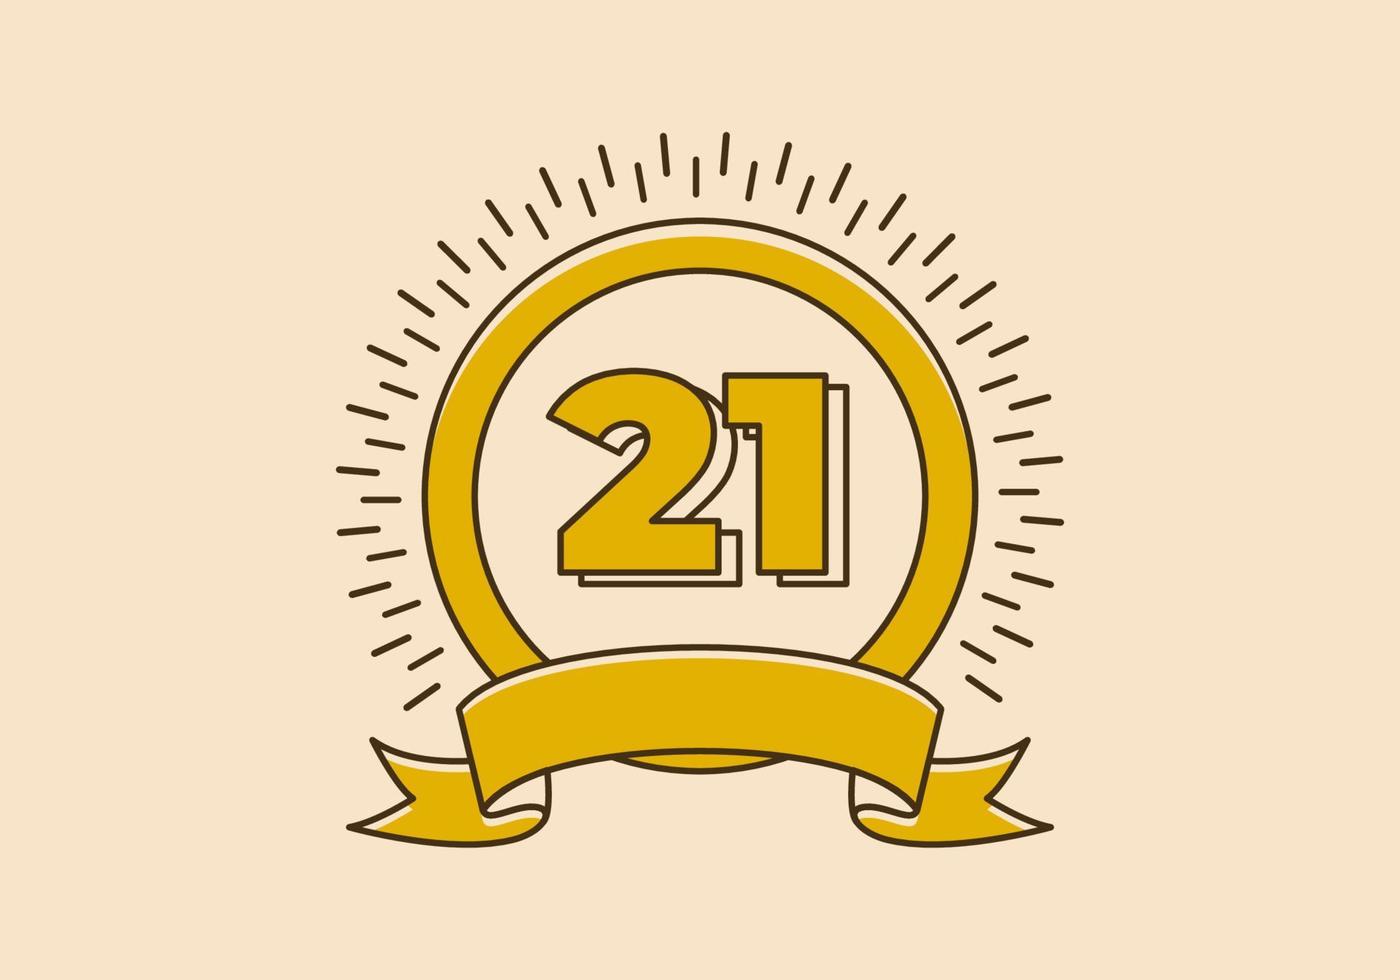 distintivo de círculo amarelo vintage com o número 21 nele vetor